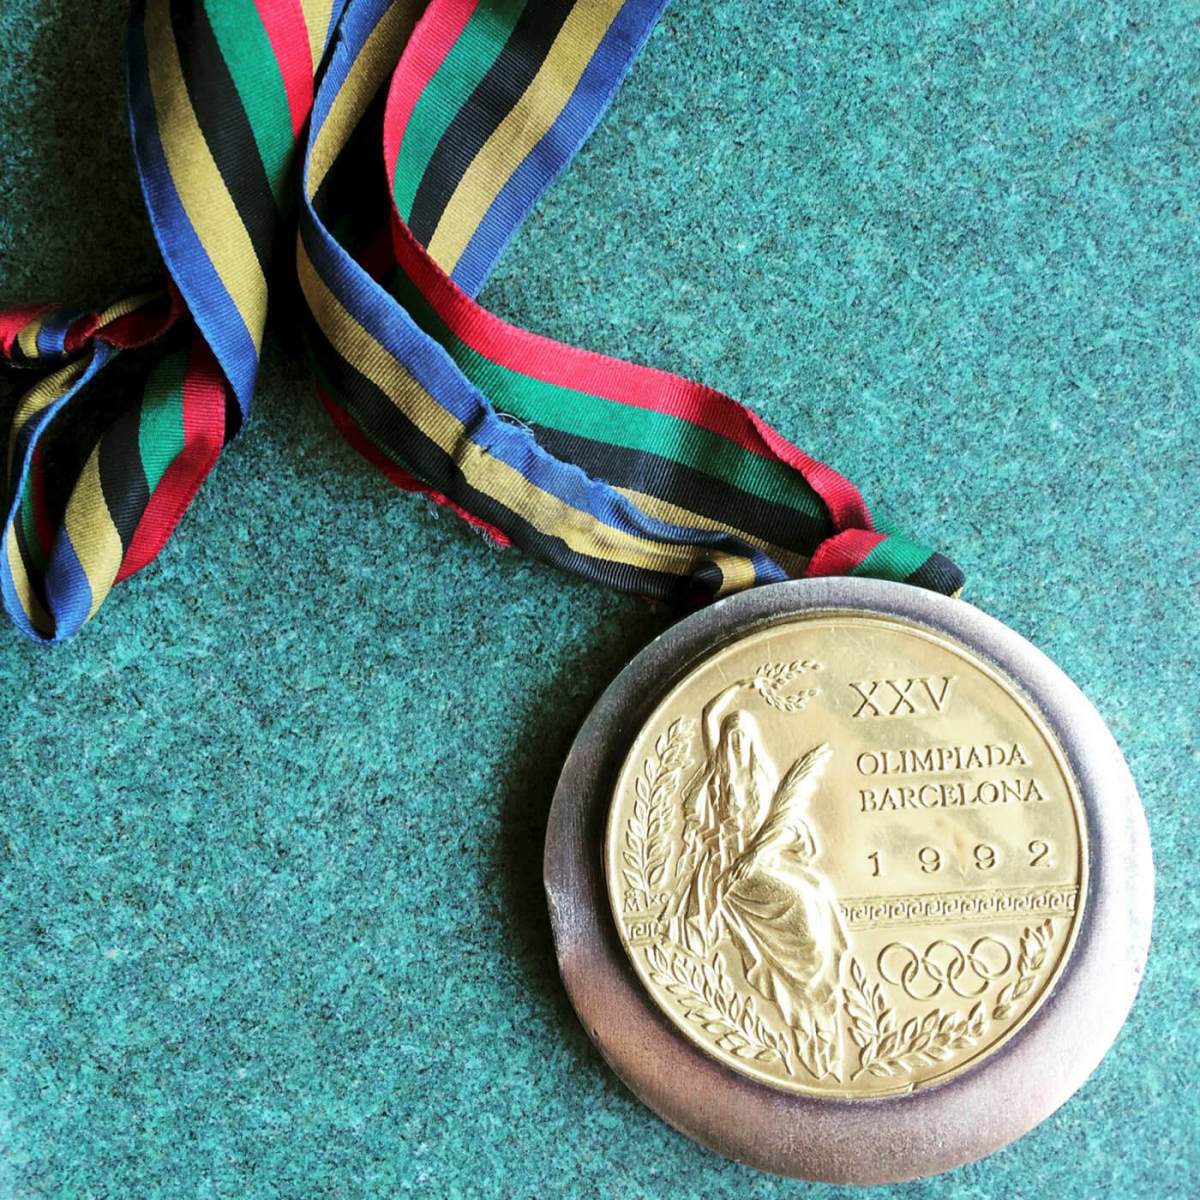 Gold medal stolen from Olympian’s car in Atlanta parking lot